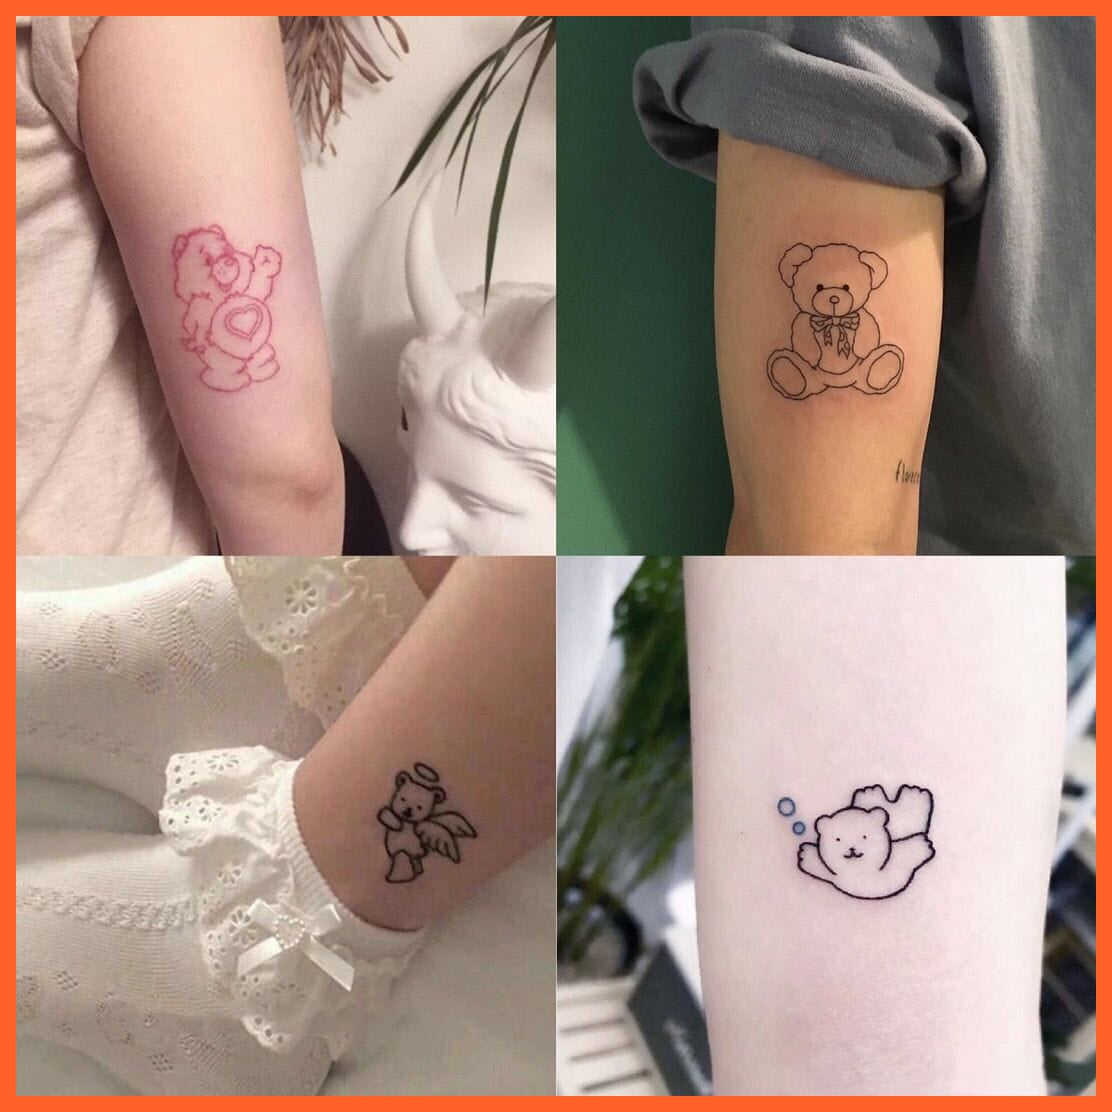 48Pcs/Lot Cute Bear Love Flower Cherry Lovely Tattoo Temporary Tatto Stickers For Women Water Transfer Fake False Tattos | whatagift.com.au.